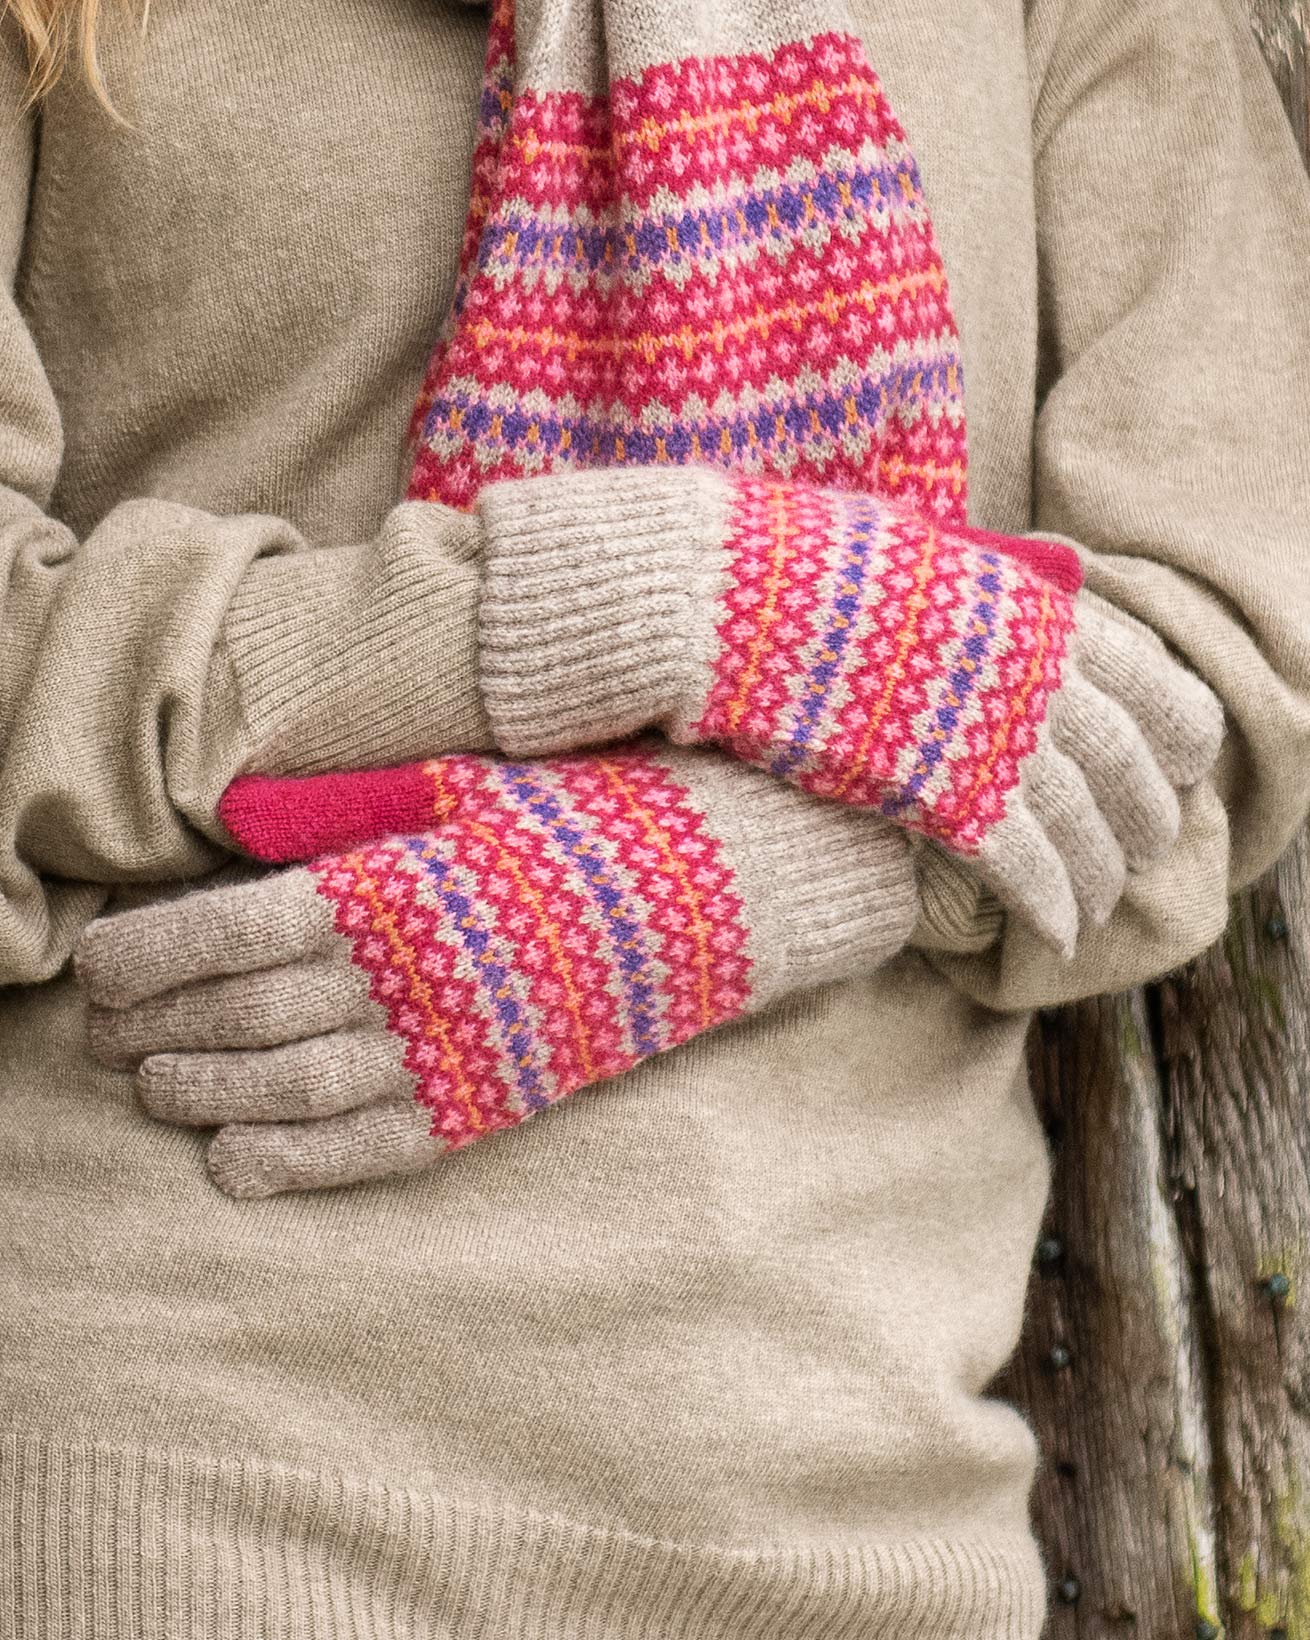 Handschuhe aus Lammwolle mit Fair-Isle-Muster